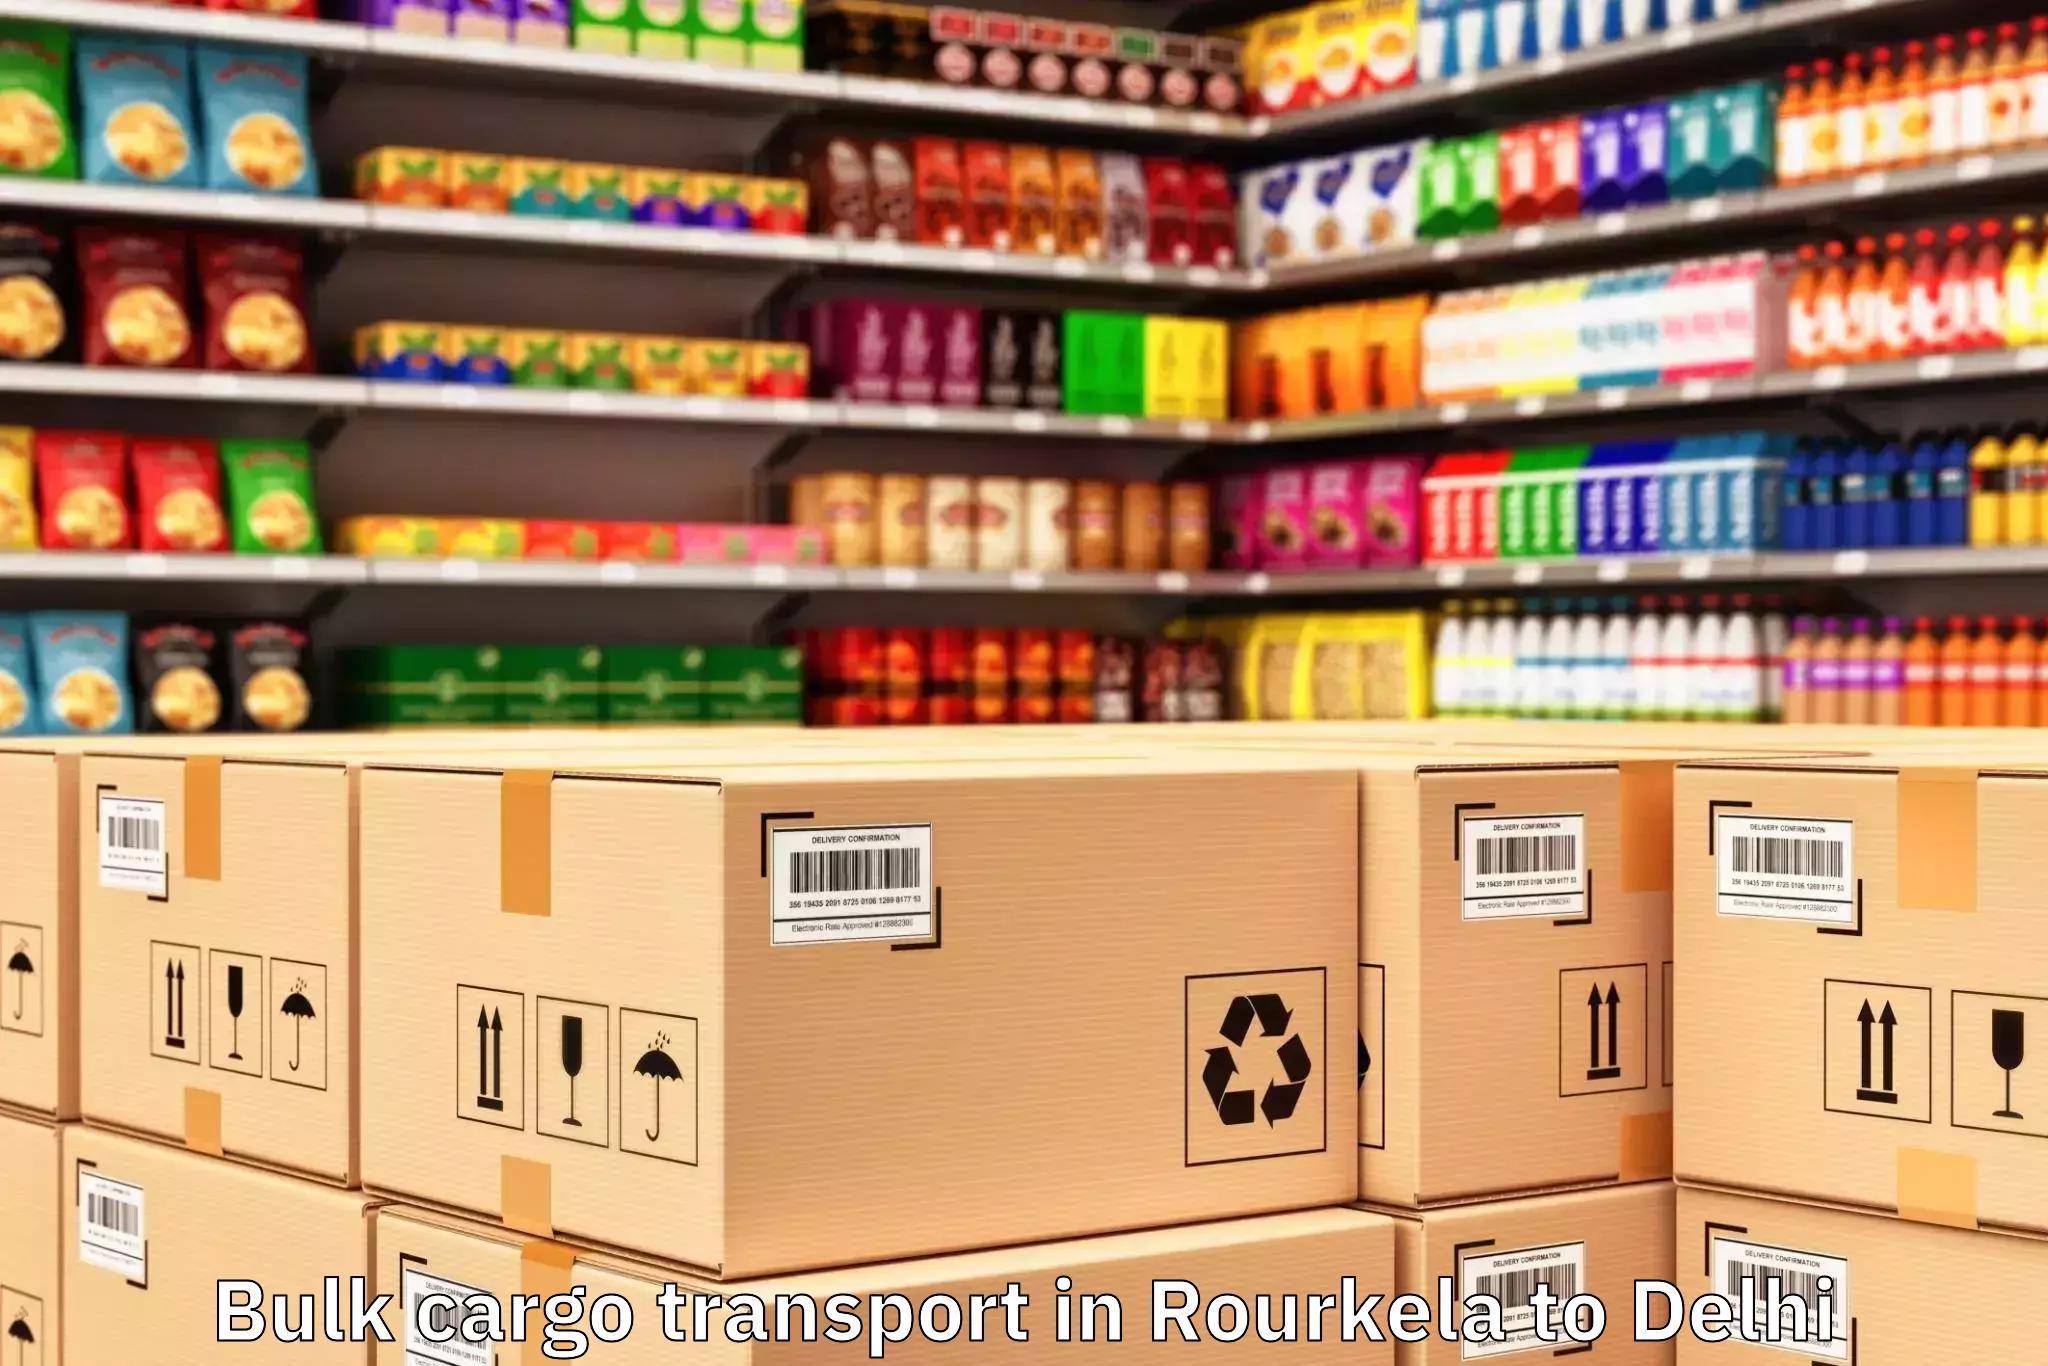 Quality Rourkela to Delhi Technological University Dtu Bulk Cargo Transport